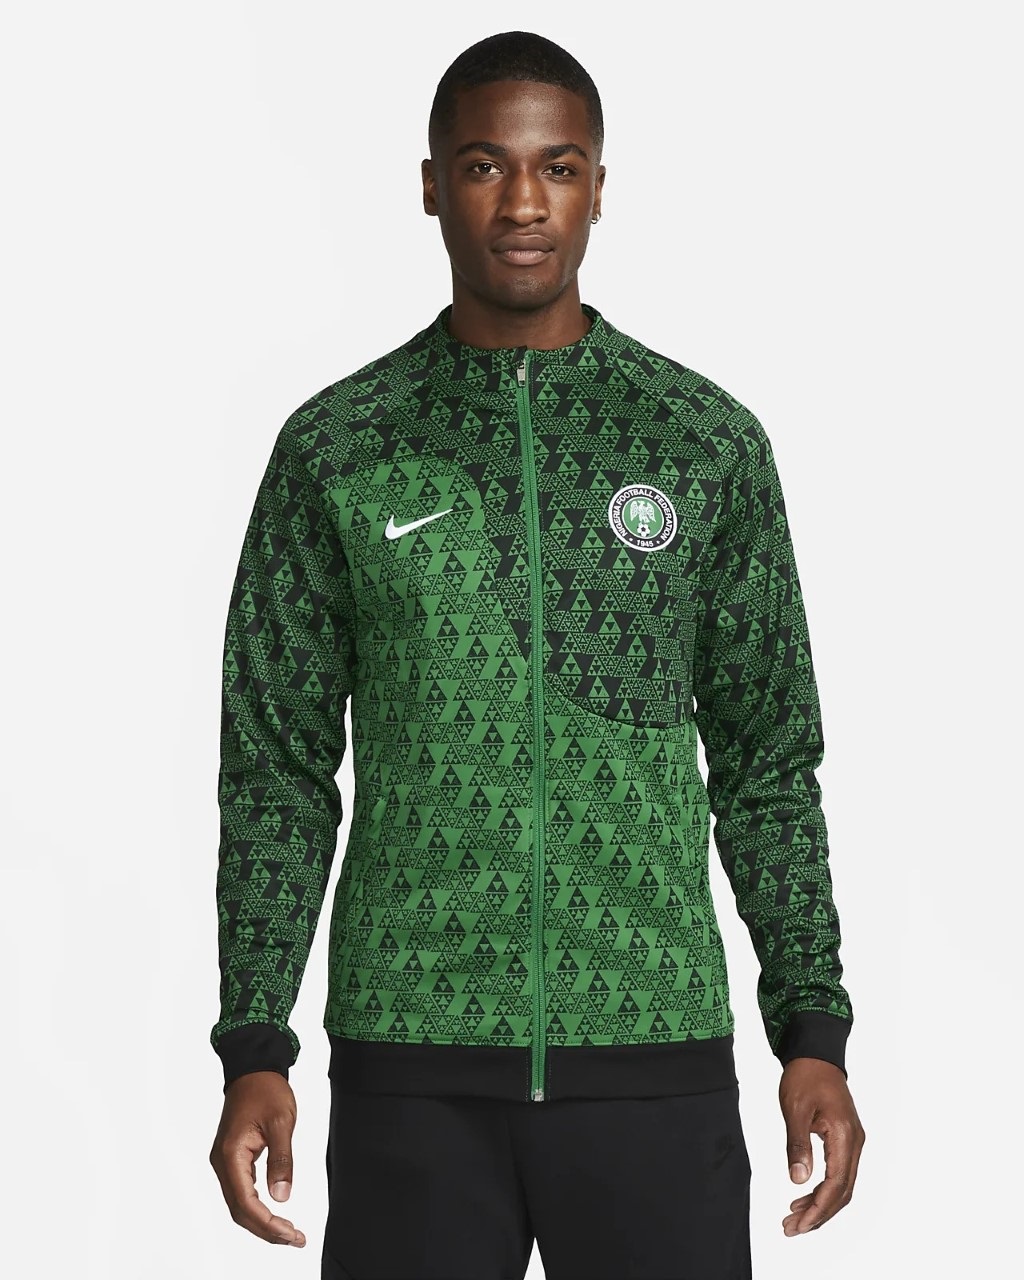 Nigeria Academy Pro jacket.